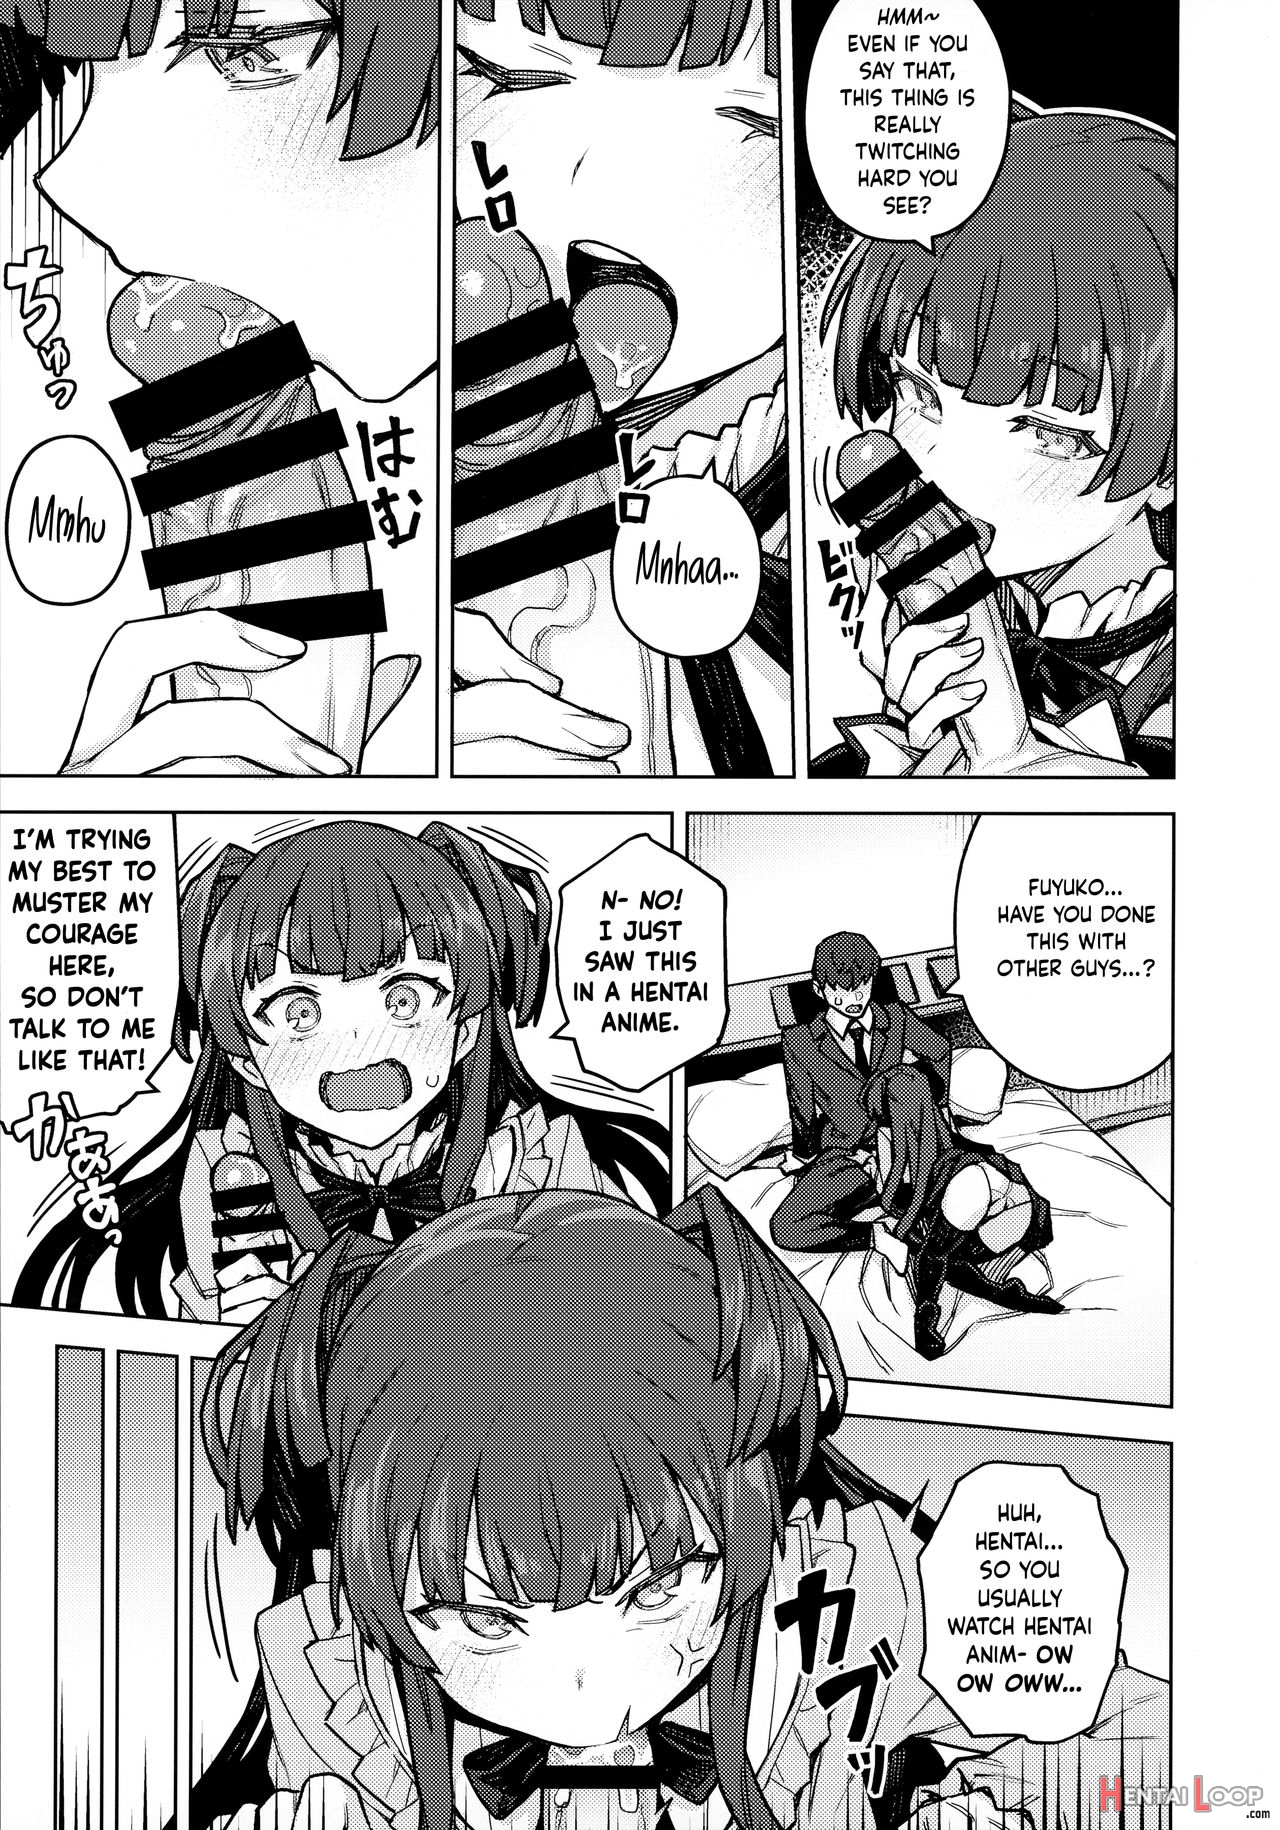 Rent-a-fuyuko page 6